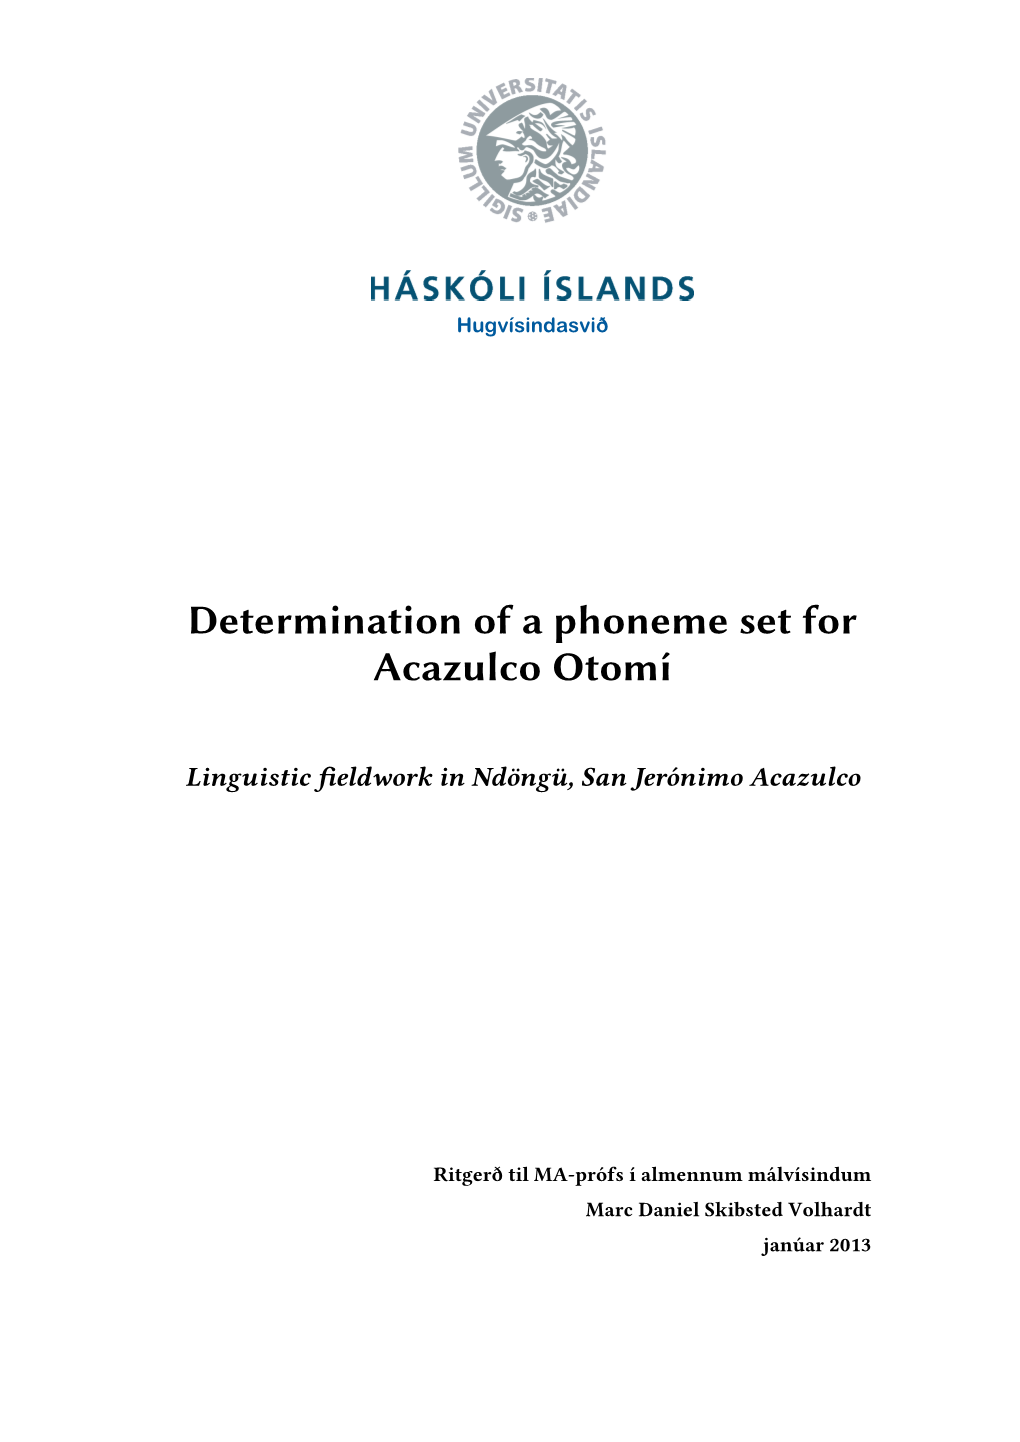 Determination of a Phoneme Set for Acazulco Otomí